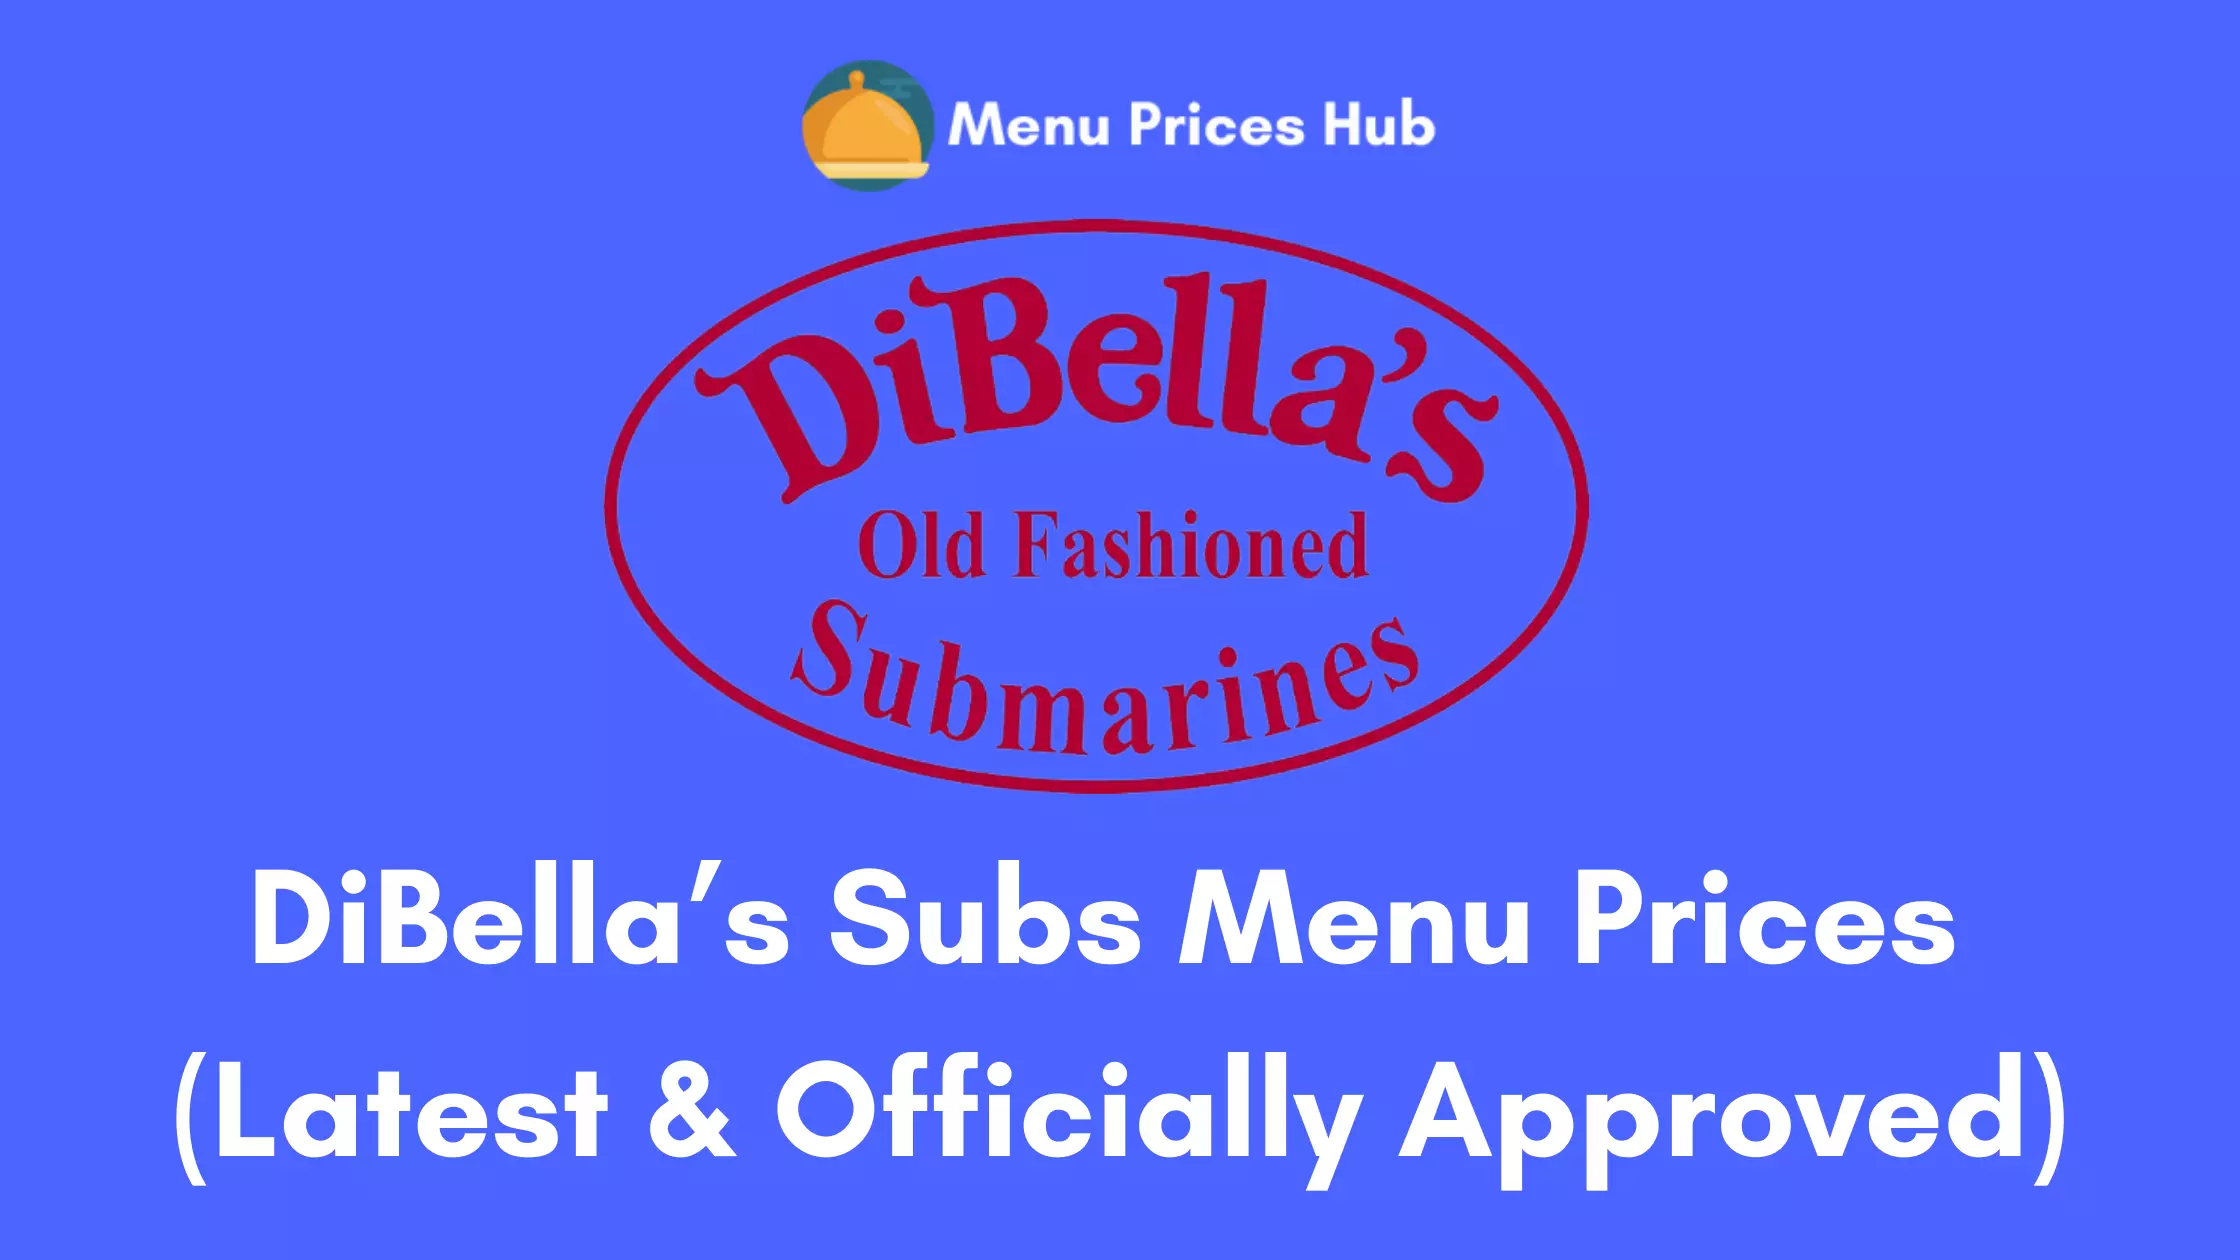 DiBella’s Subs Menu Prices